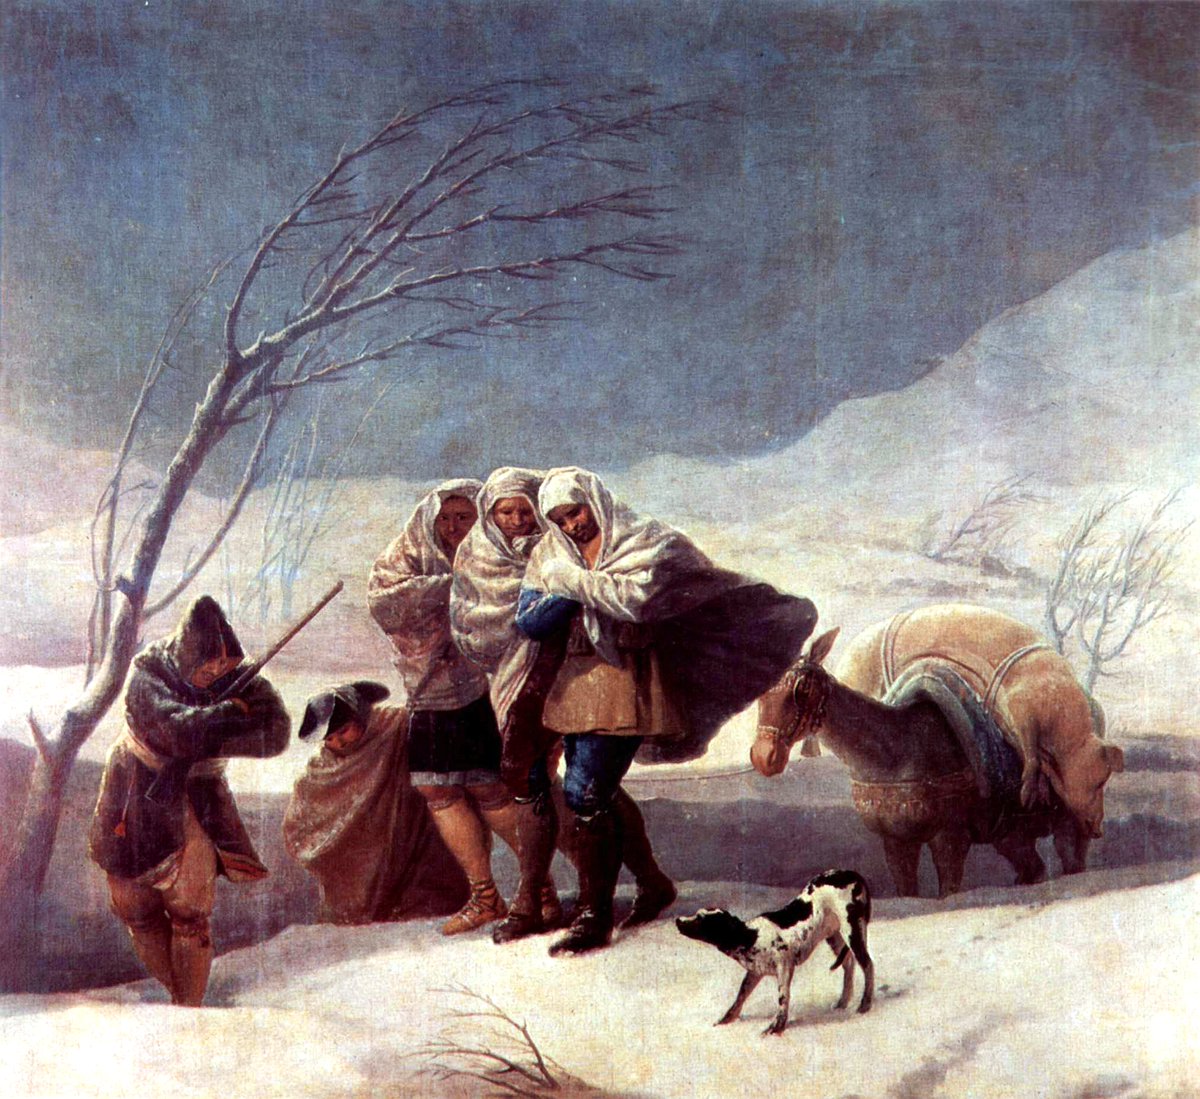 RT @artistgoya: The Snowstorm (Winter), 1787 #goya #franciscogoya https://t.co/Pdc33rl0Yi